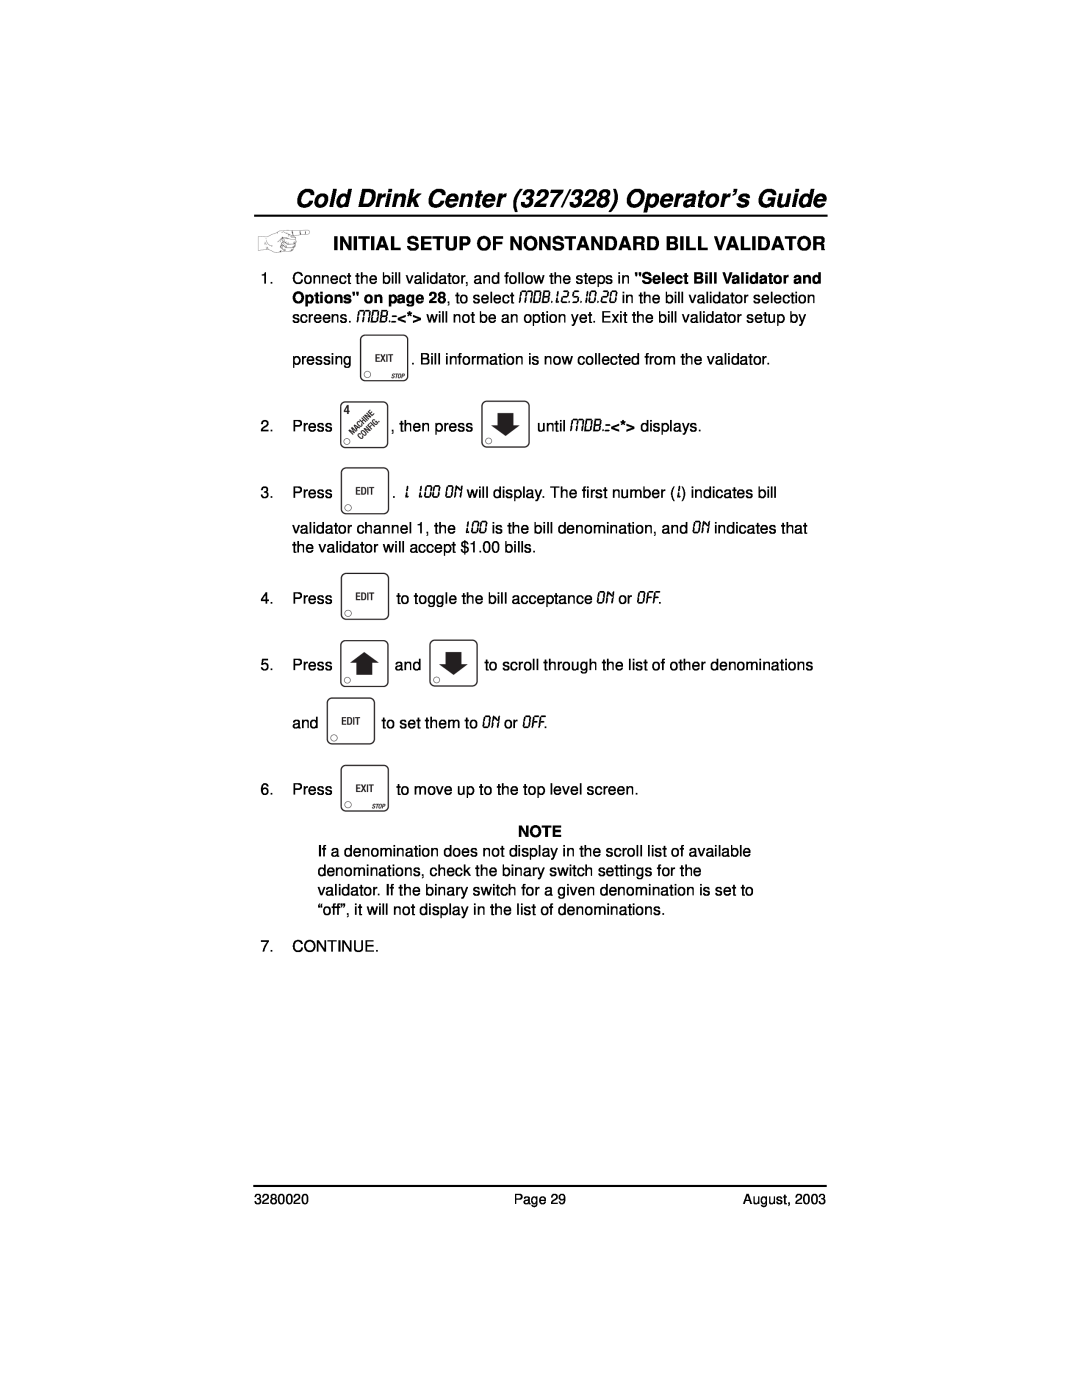 Everpure 325 manual Cold Drink Center 327/328 Operator’s Guide, Initial Setup Of Nonstandard Bill Validator 